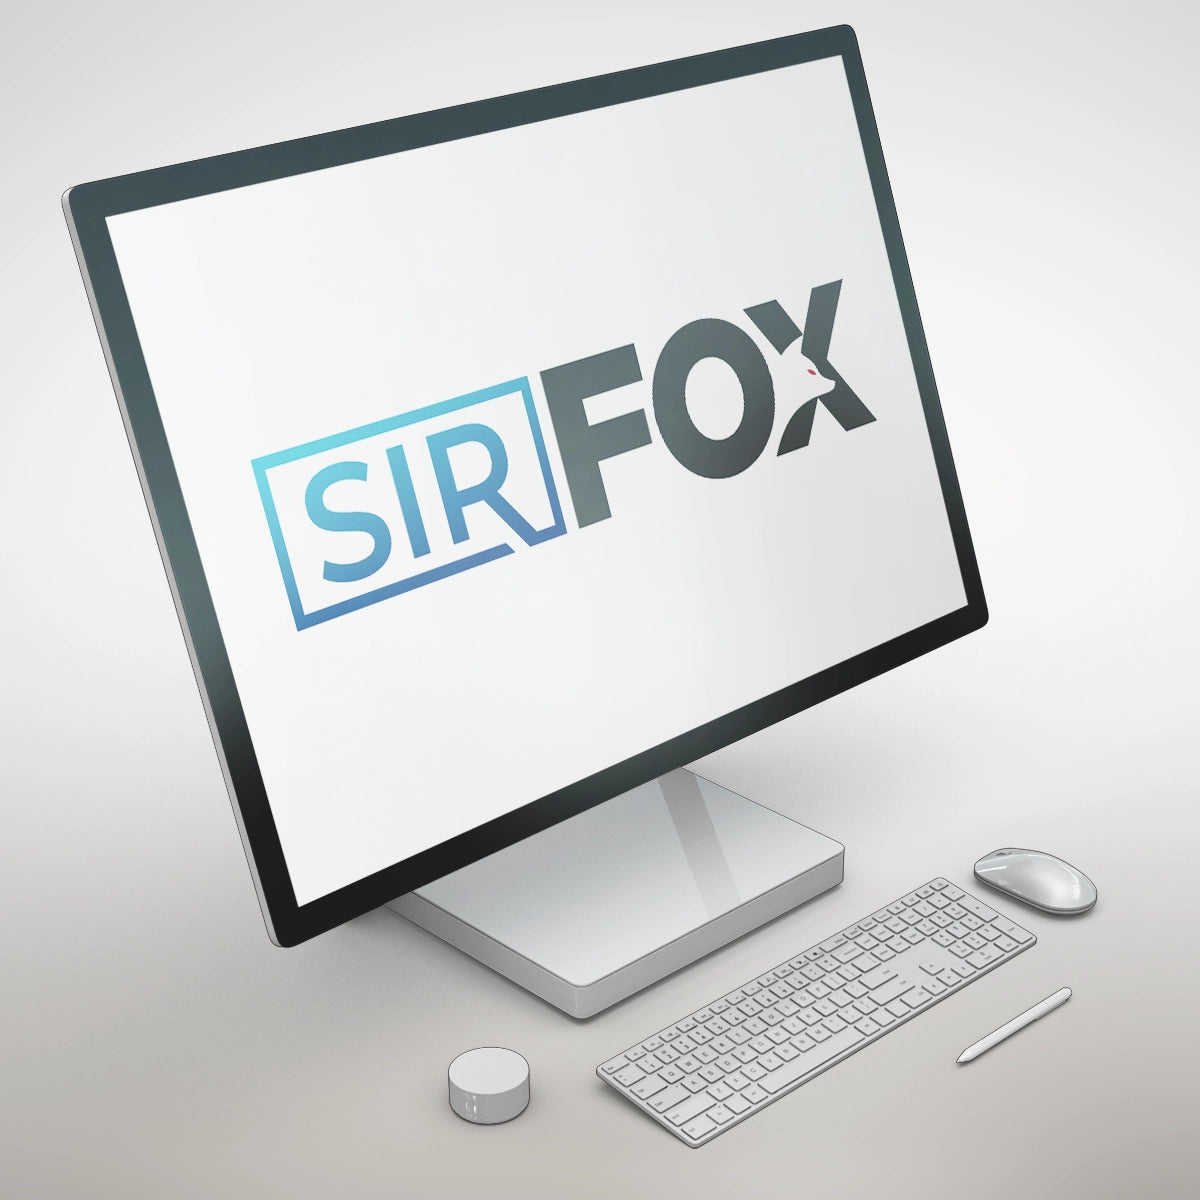 SirFox.com